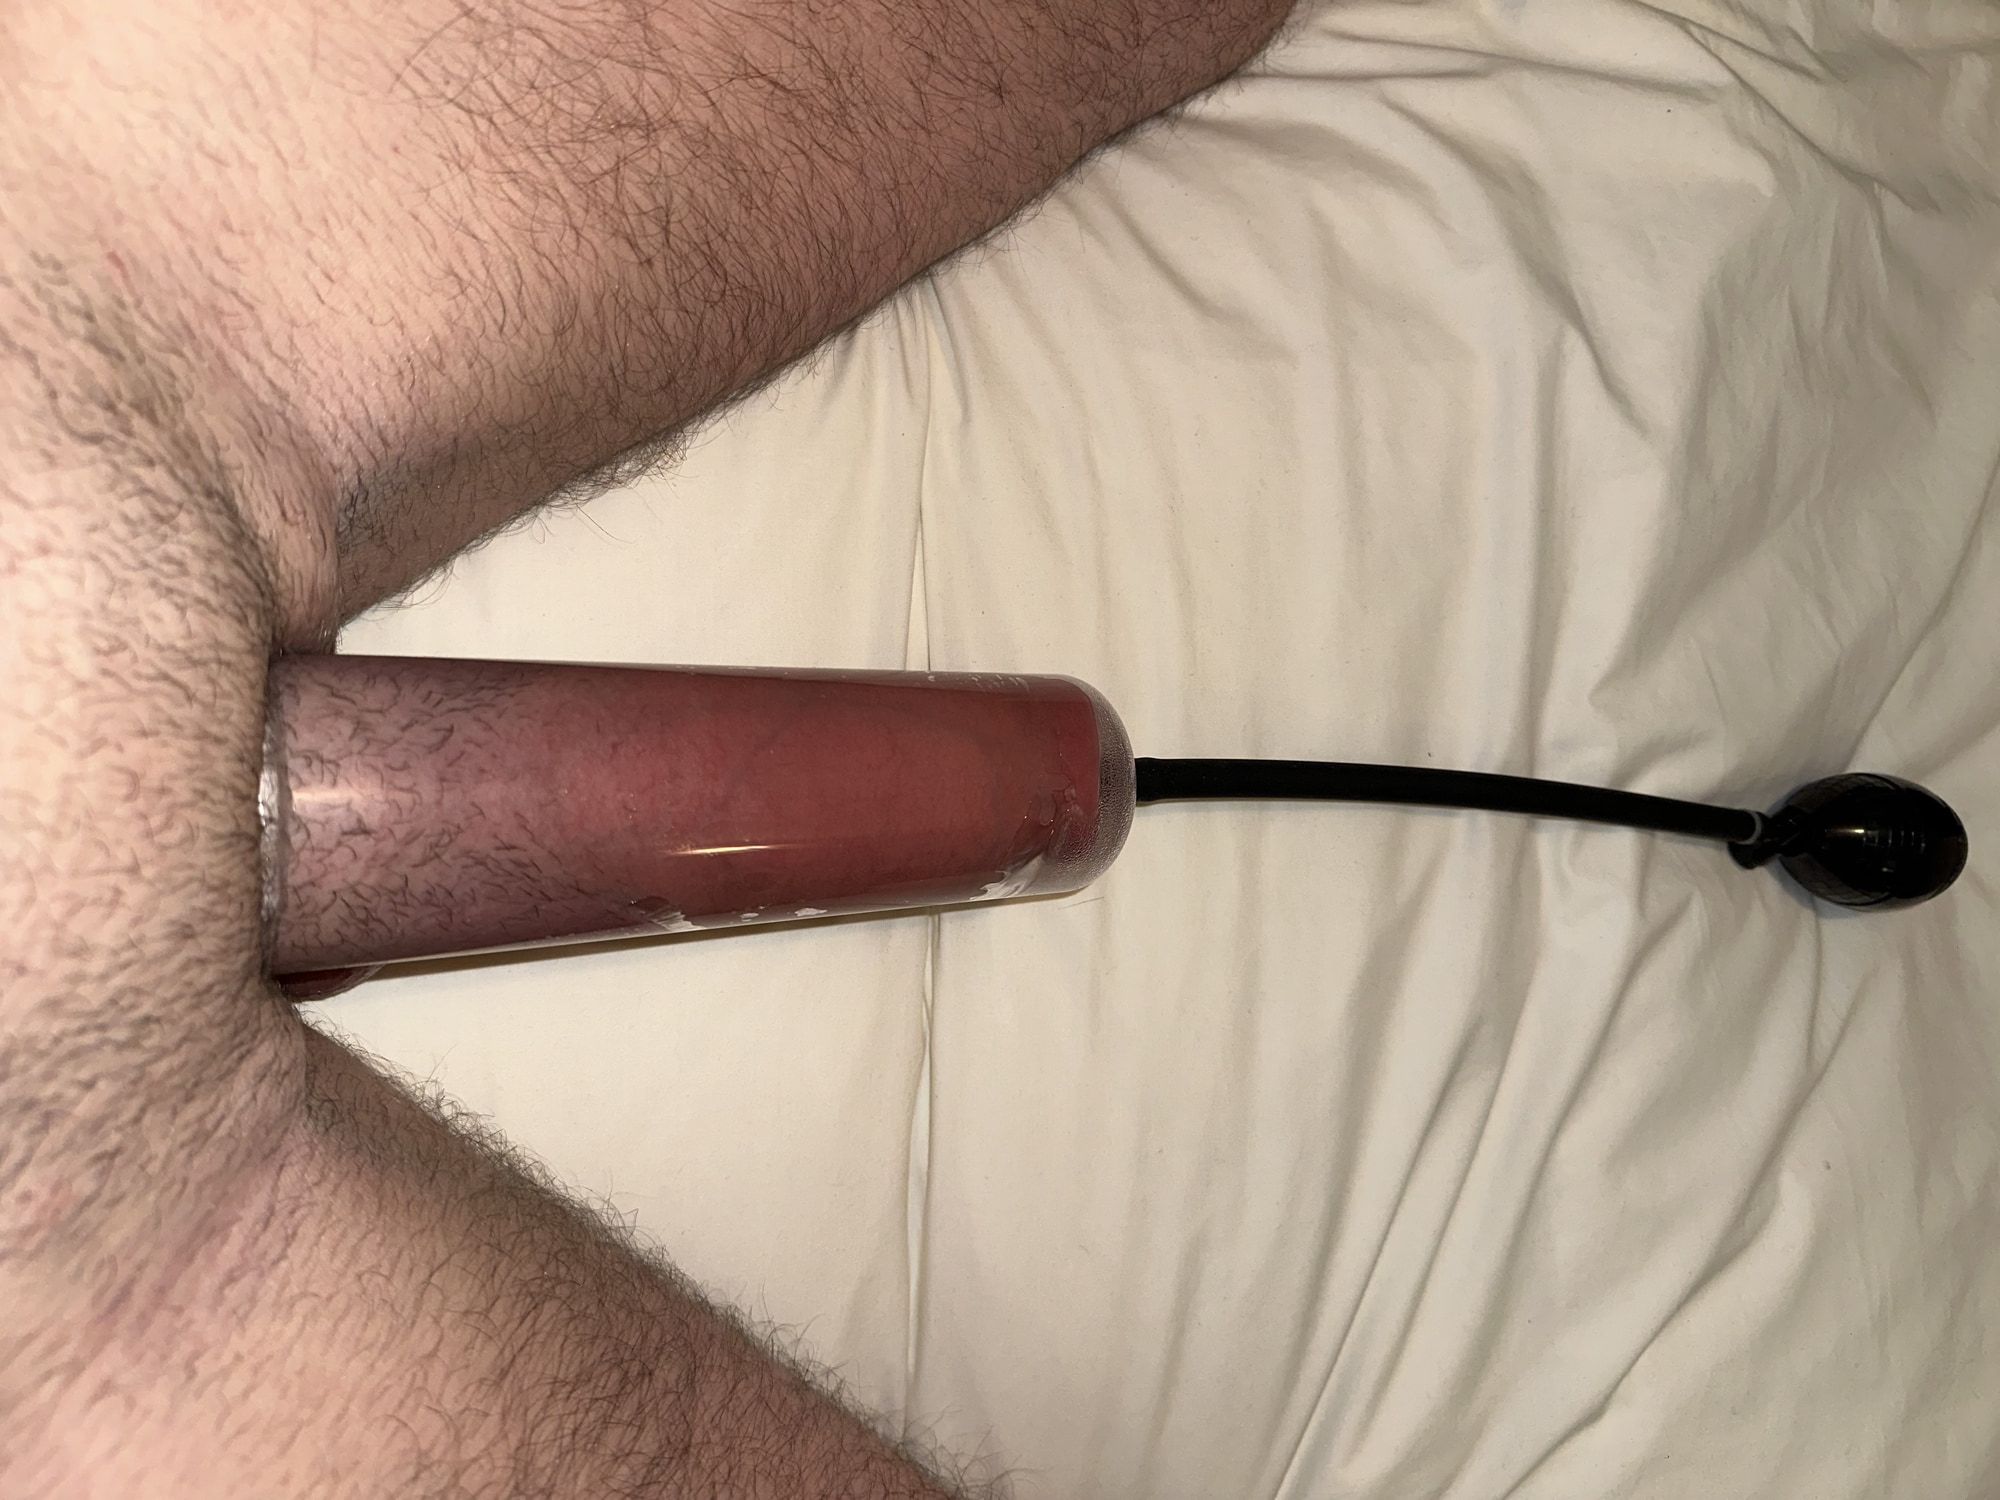 Pumping cock and balls #4